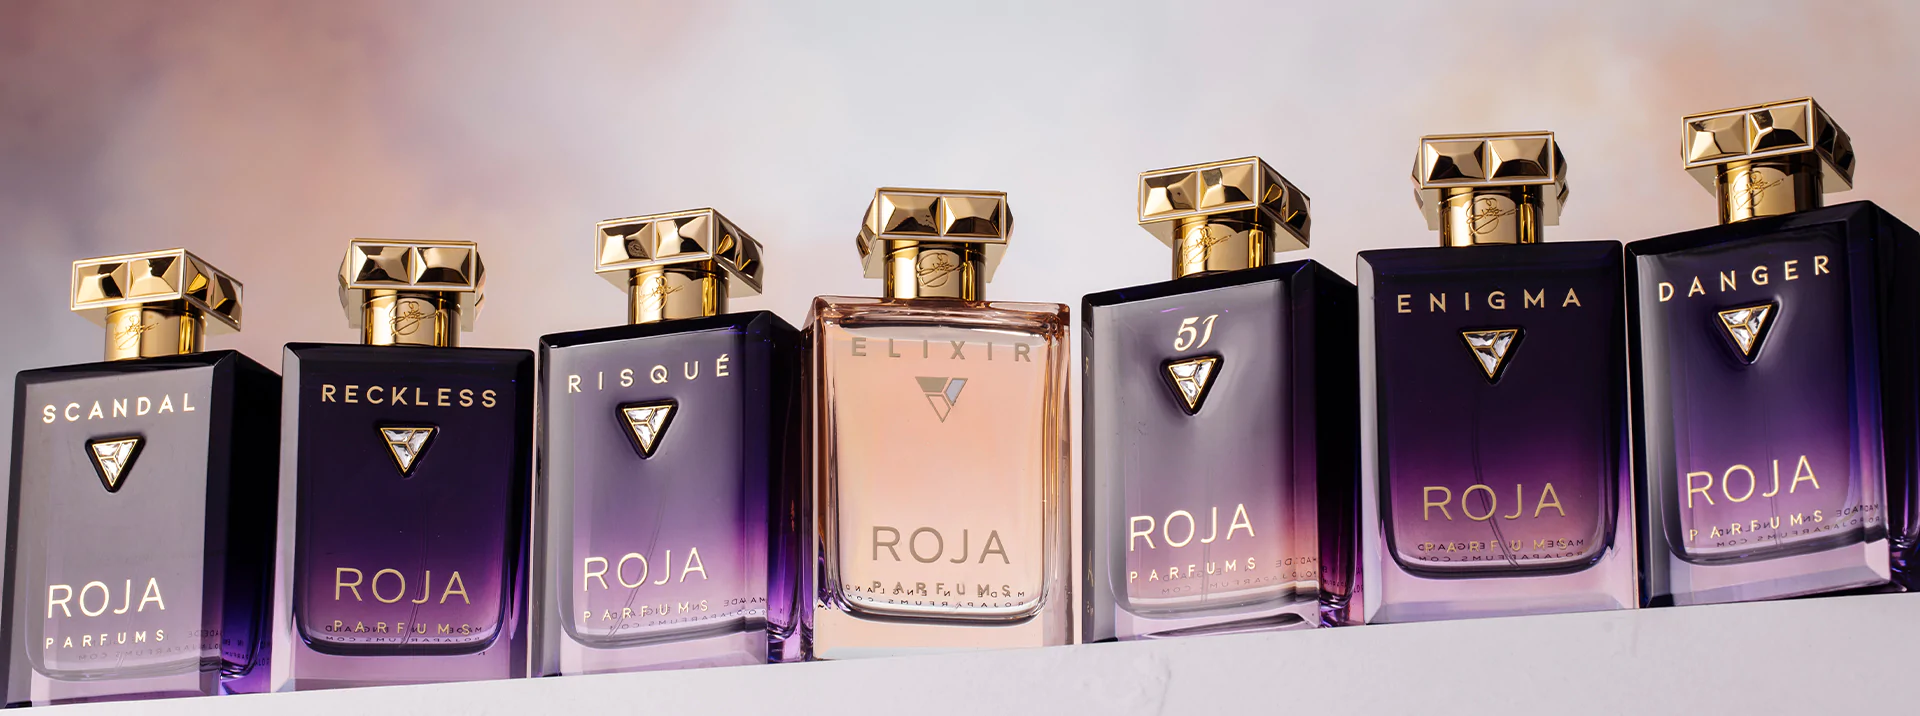 Scandal Essence De Parfum - ROJA